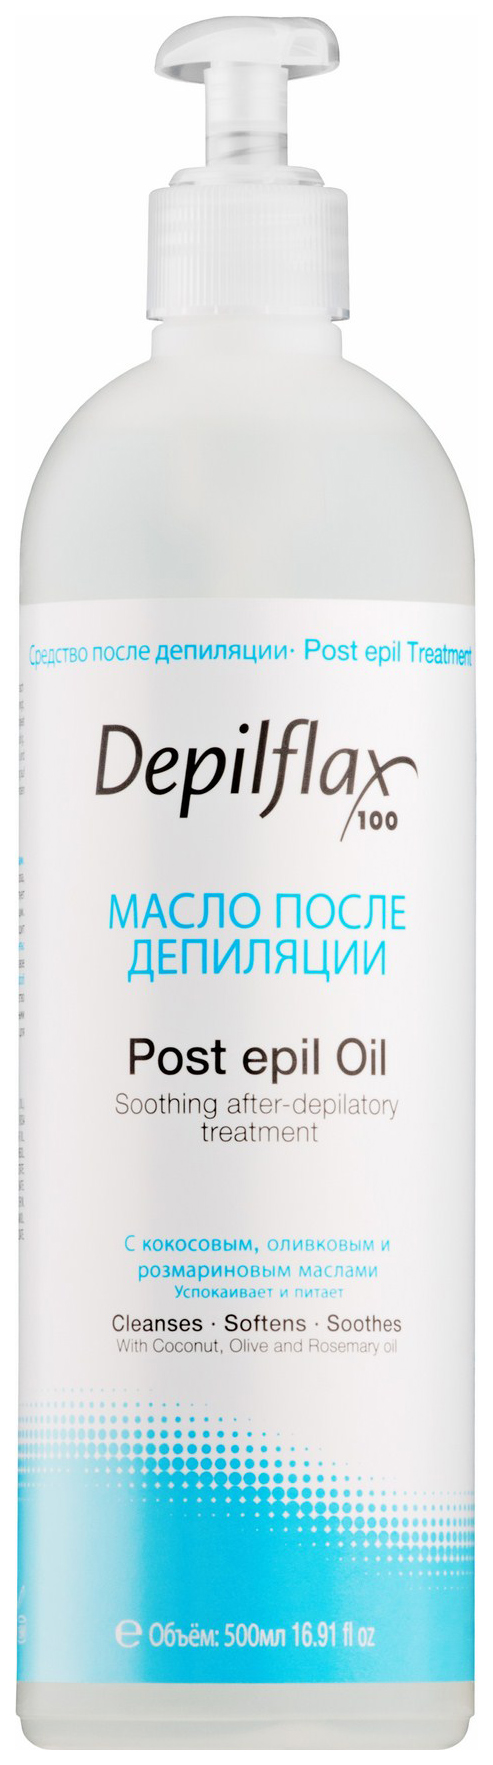 Depilflax масло после депиляции 250 мл